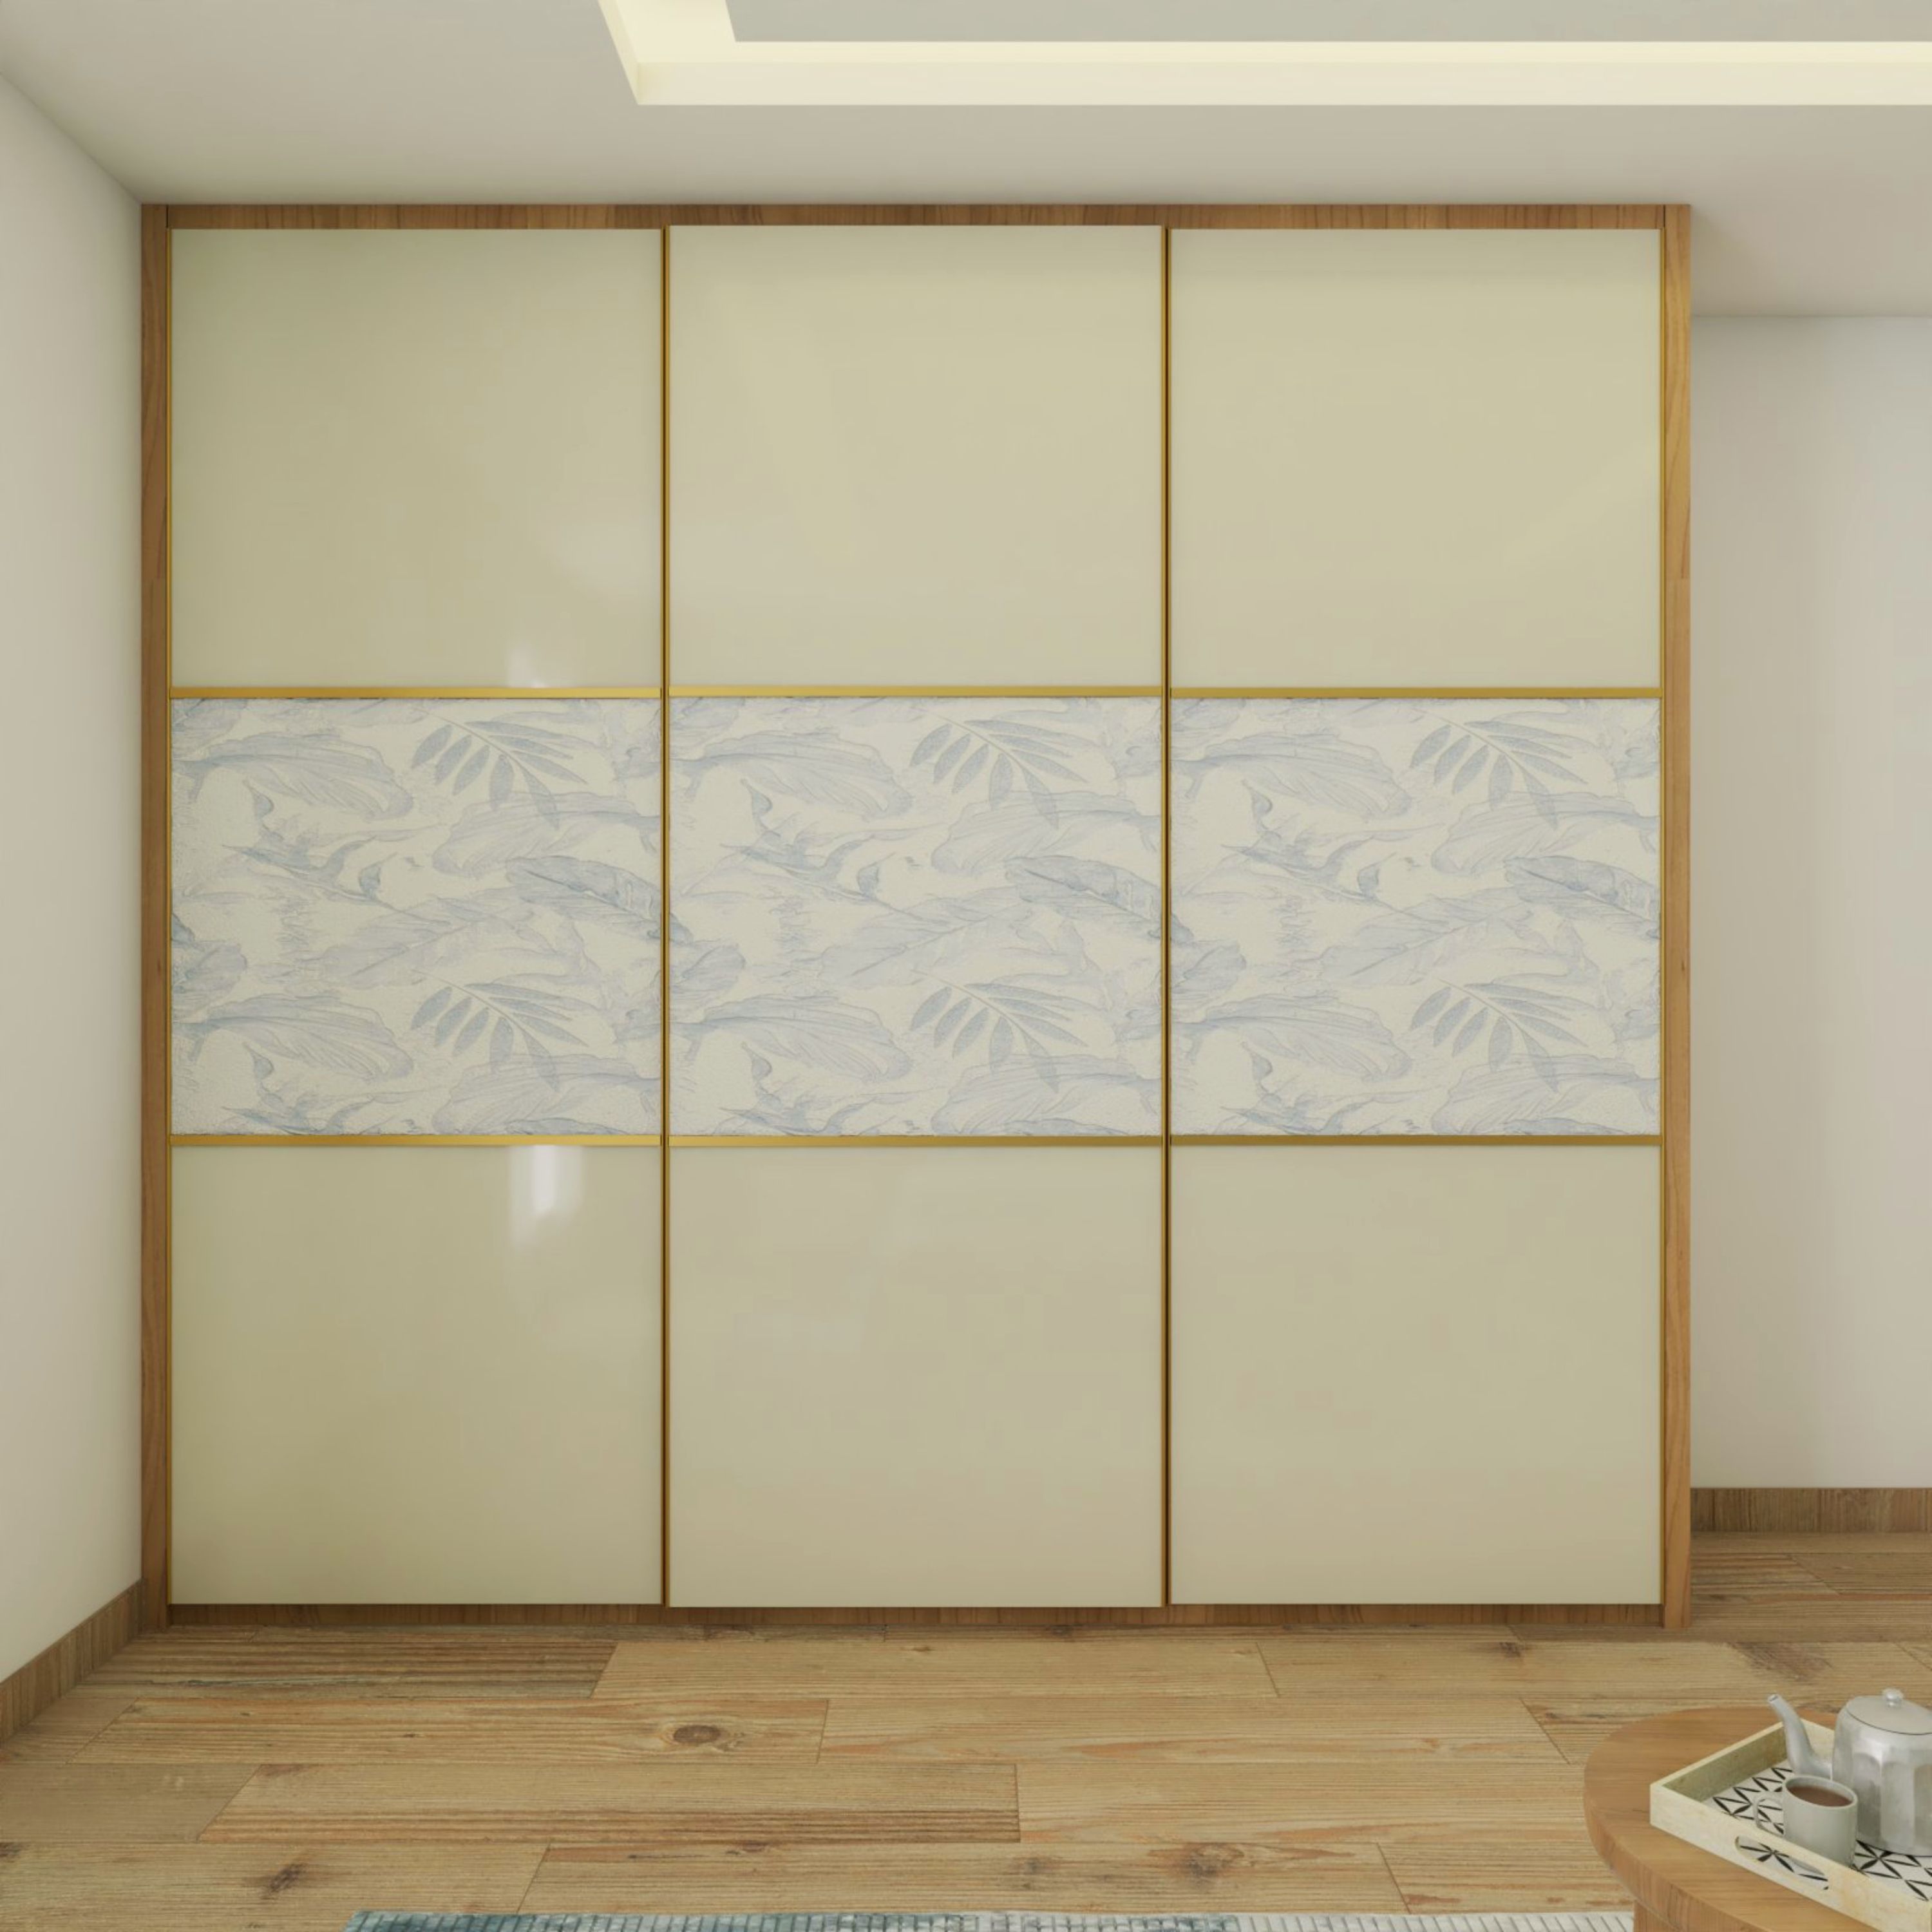 Contemporary 3-Door Semi-Glossy Beige Wardrobe Design With Leafy Blue-White Shutter Panel